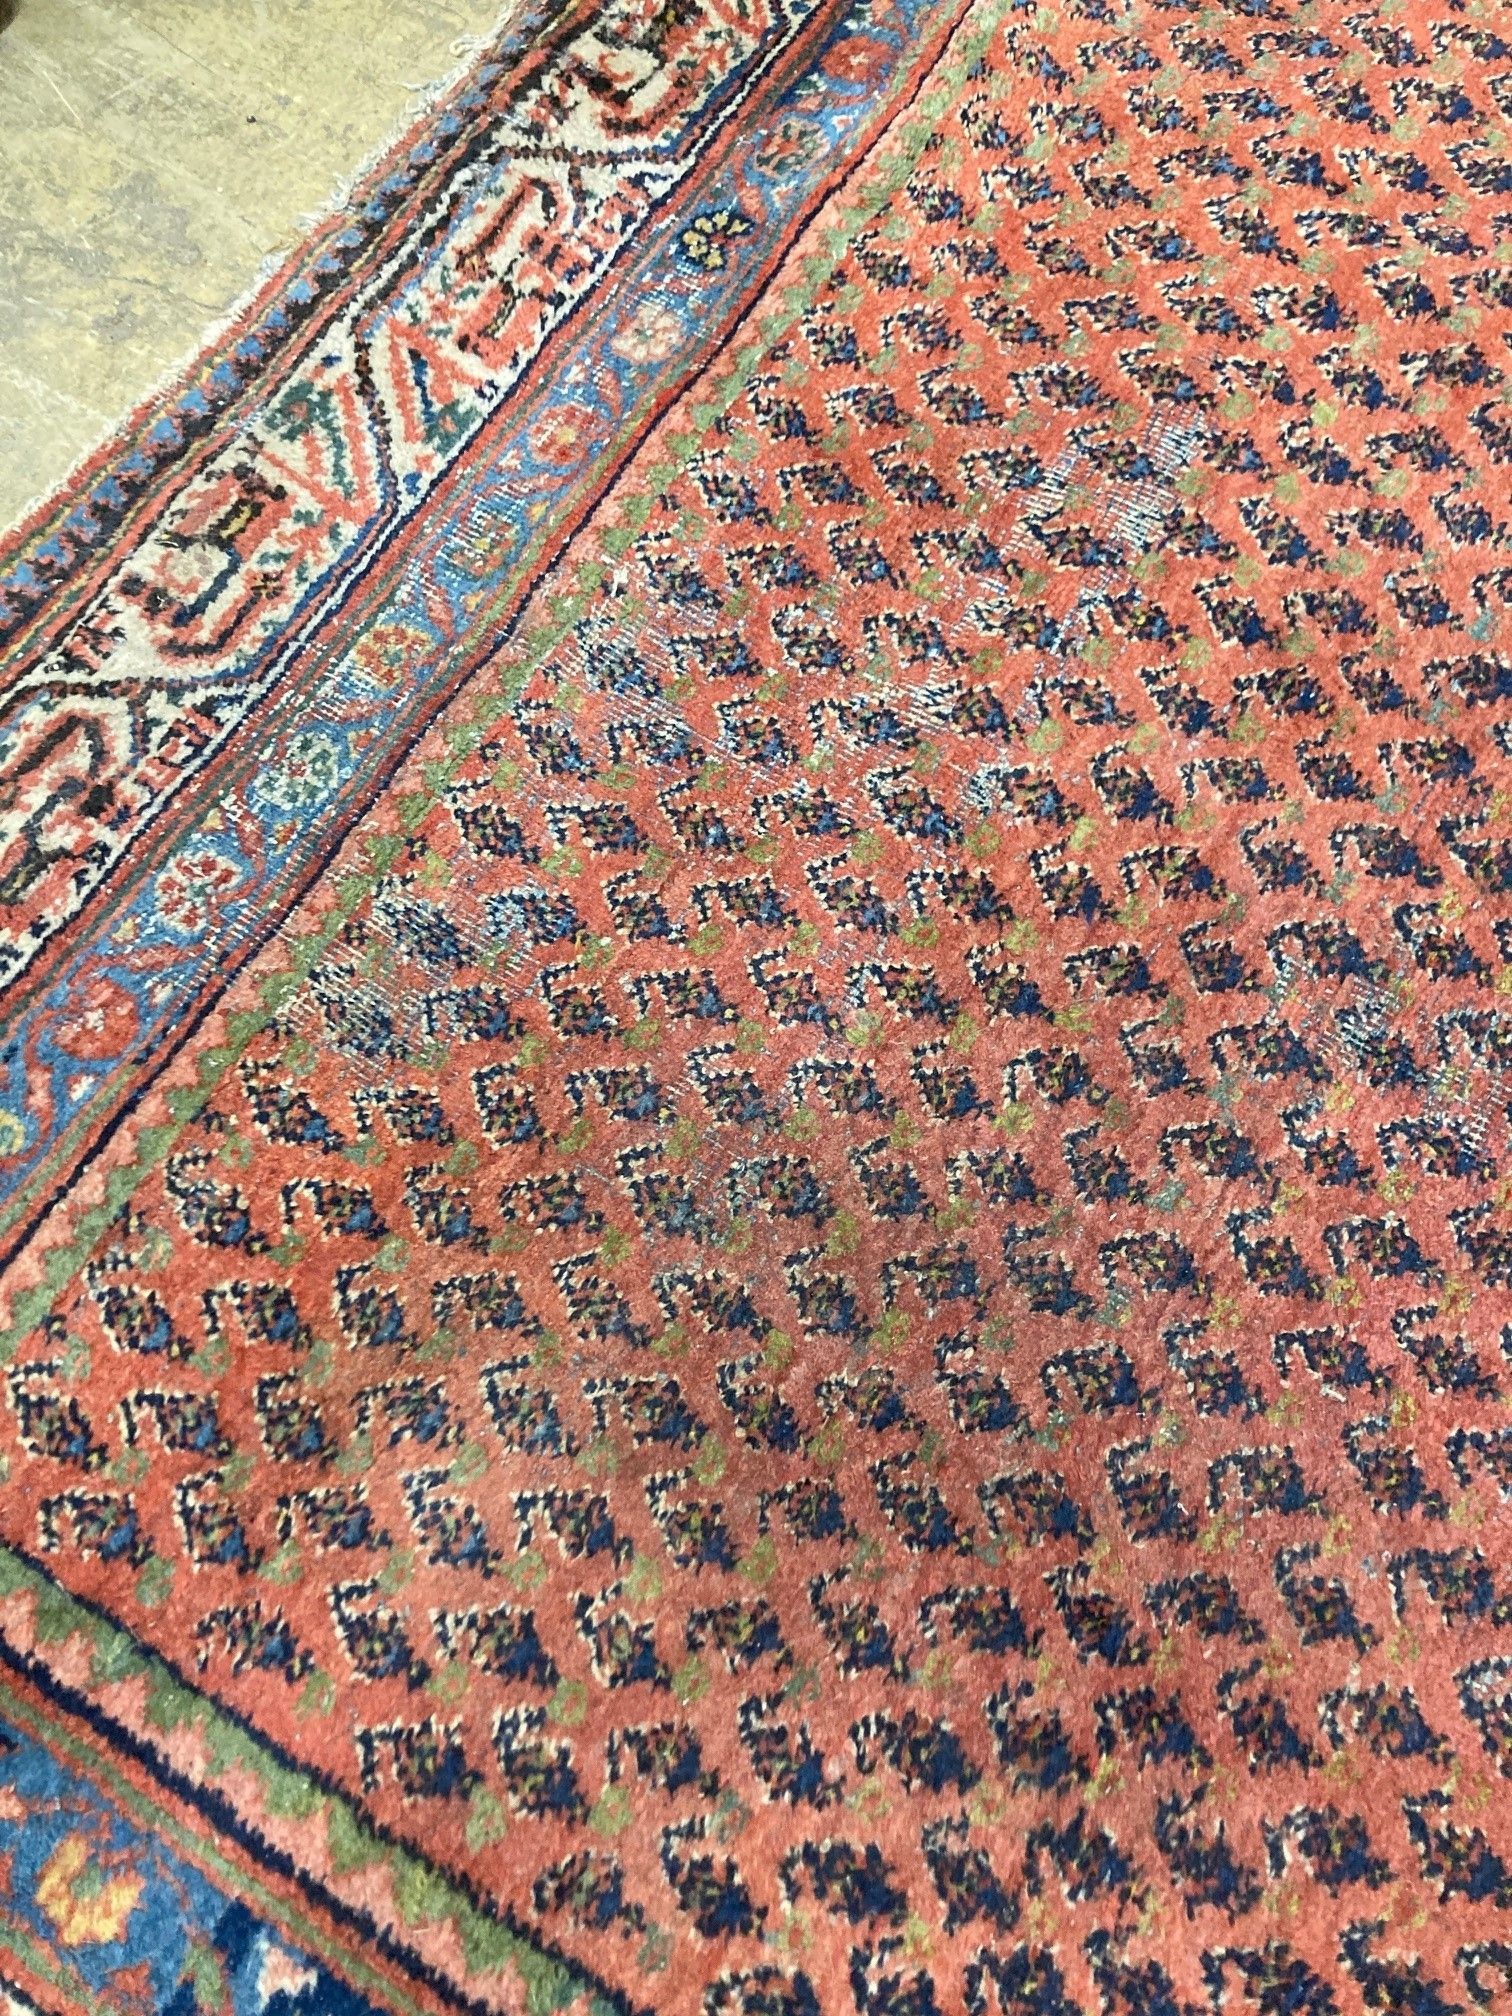 A Feraghan red ground carpet, 314 x 217cm